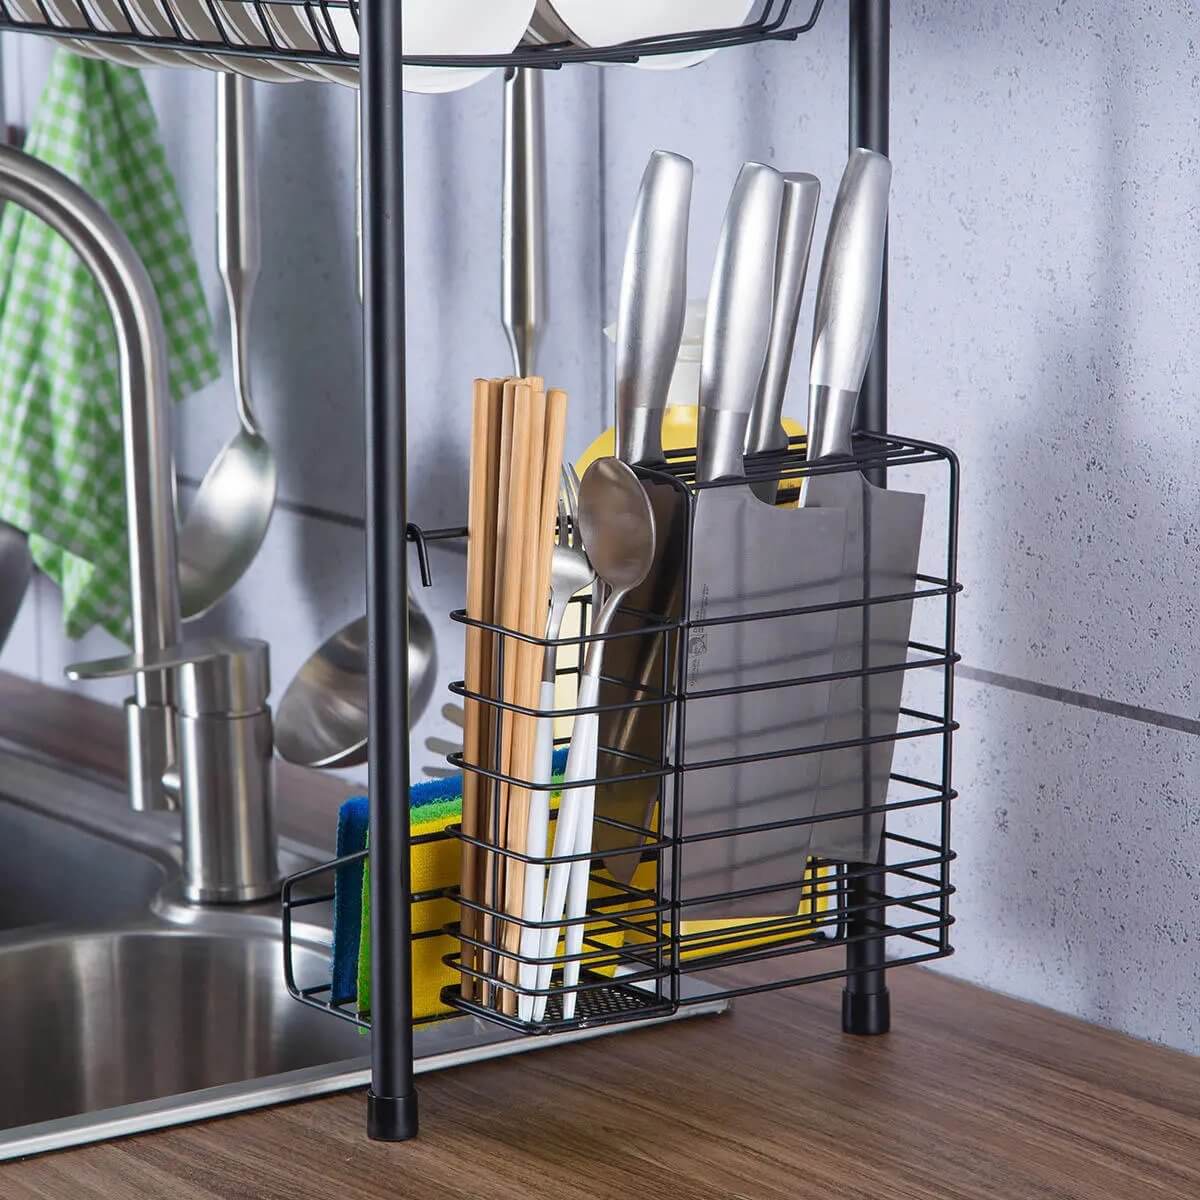 https://cdn.shopify.com/s/files/1/2572/7700/files/over-sink-kitchen-dishes-drying-rack-shelf-organizer-closeup-3.jpg?v=1597311329